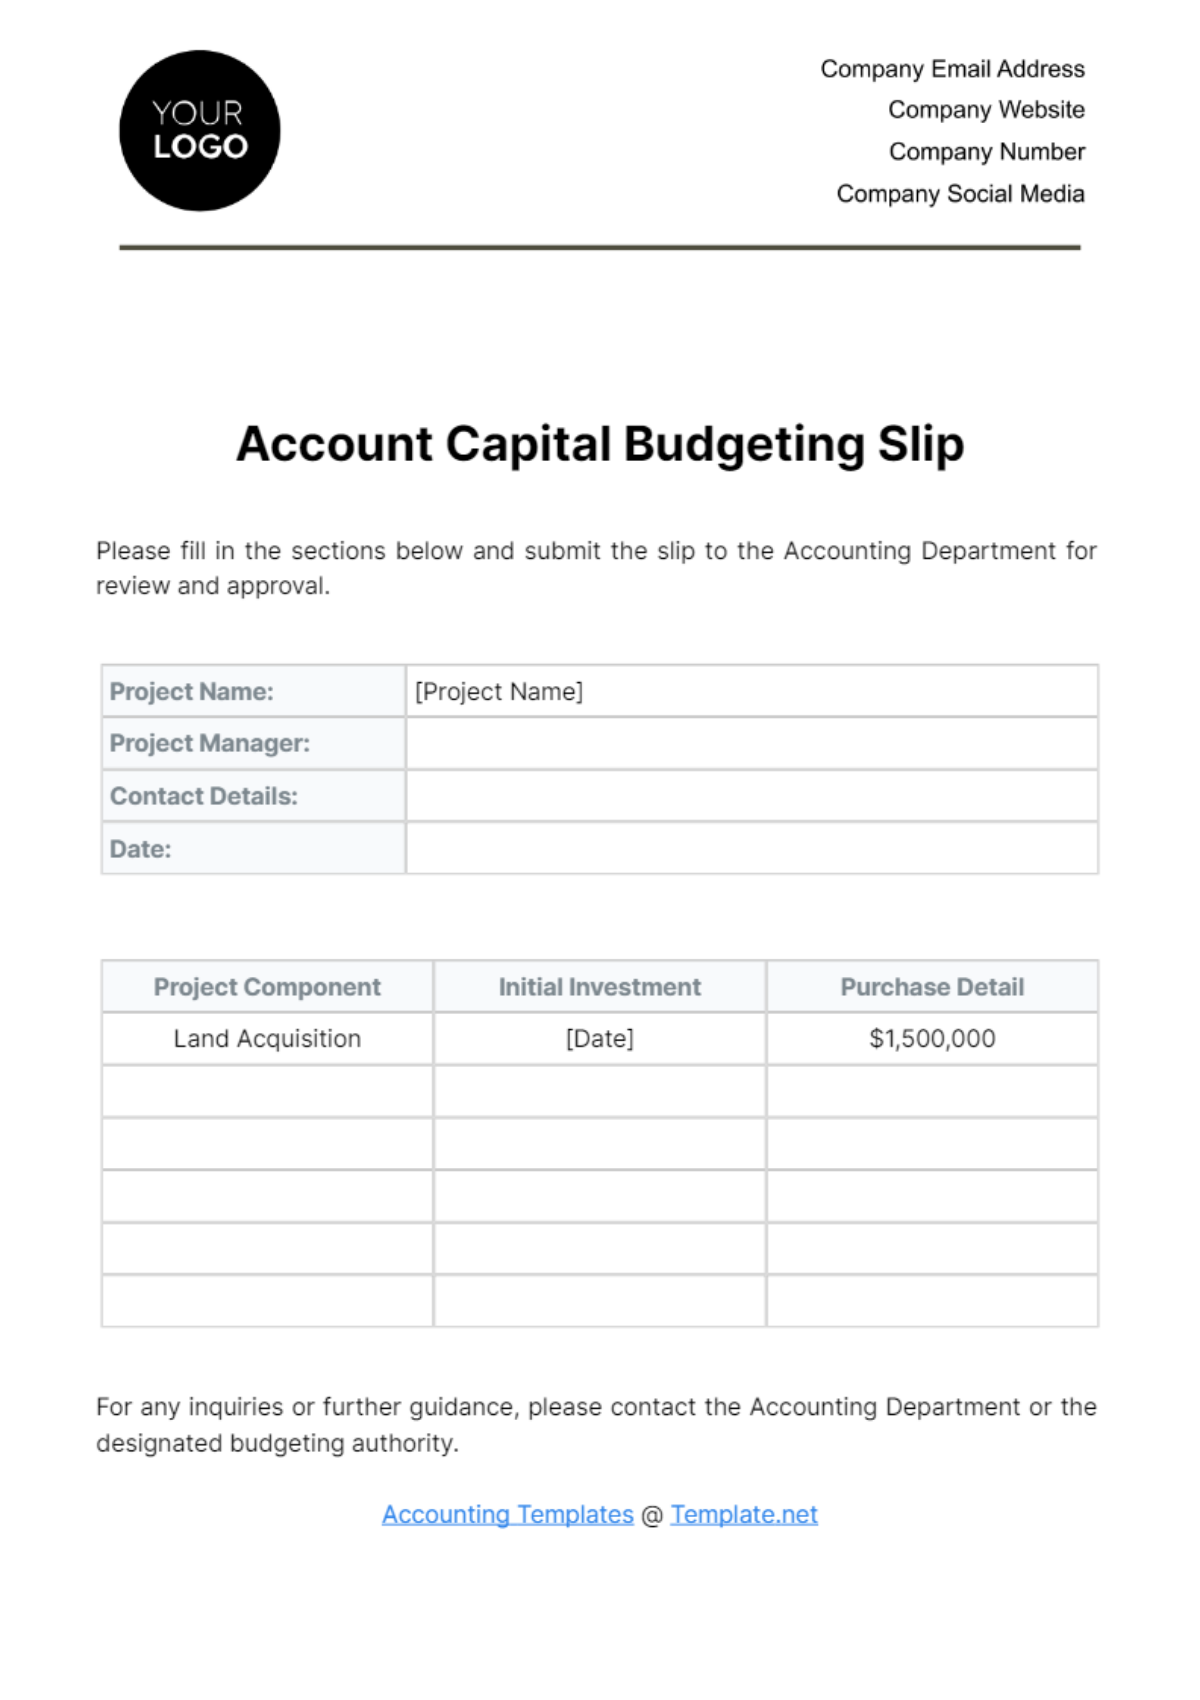 Account Capital Budgeting Slip Template